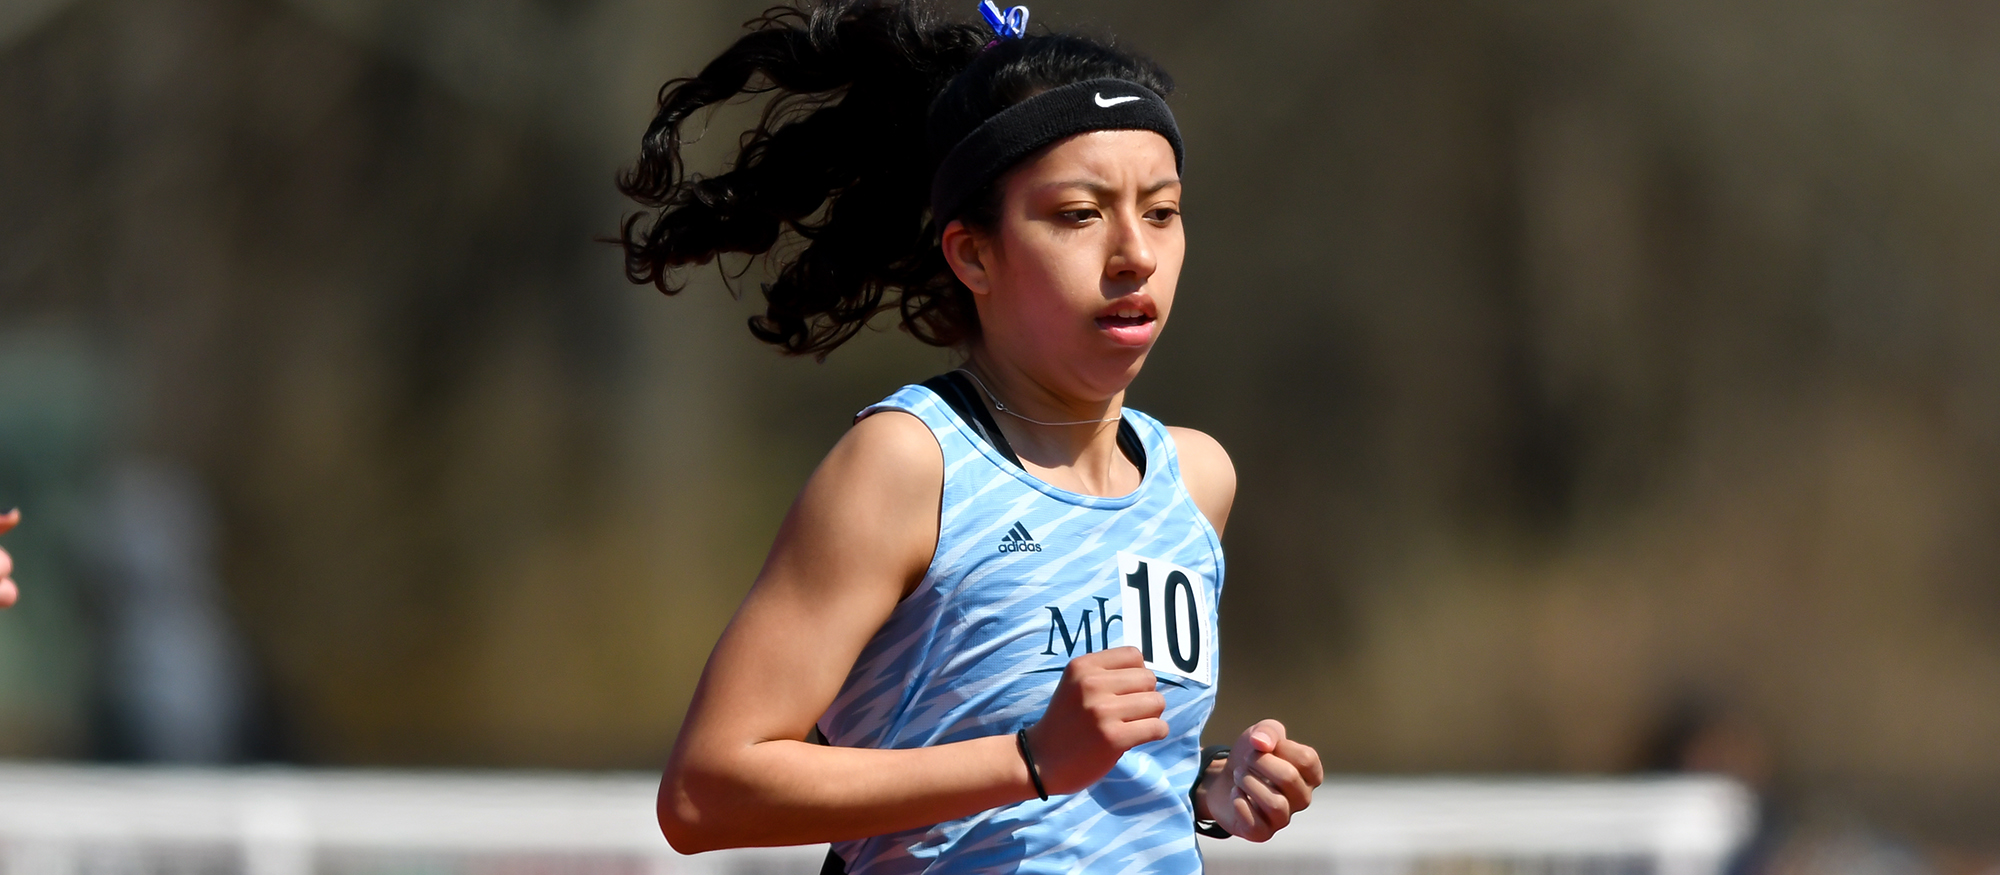 Action photo of Lyons track & field athlete, Michelle Serrano.